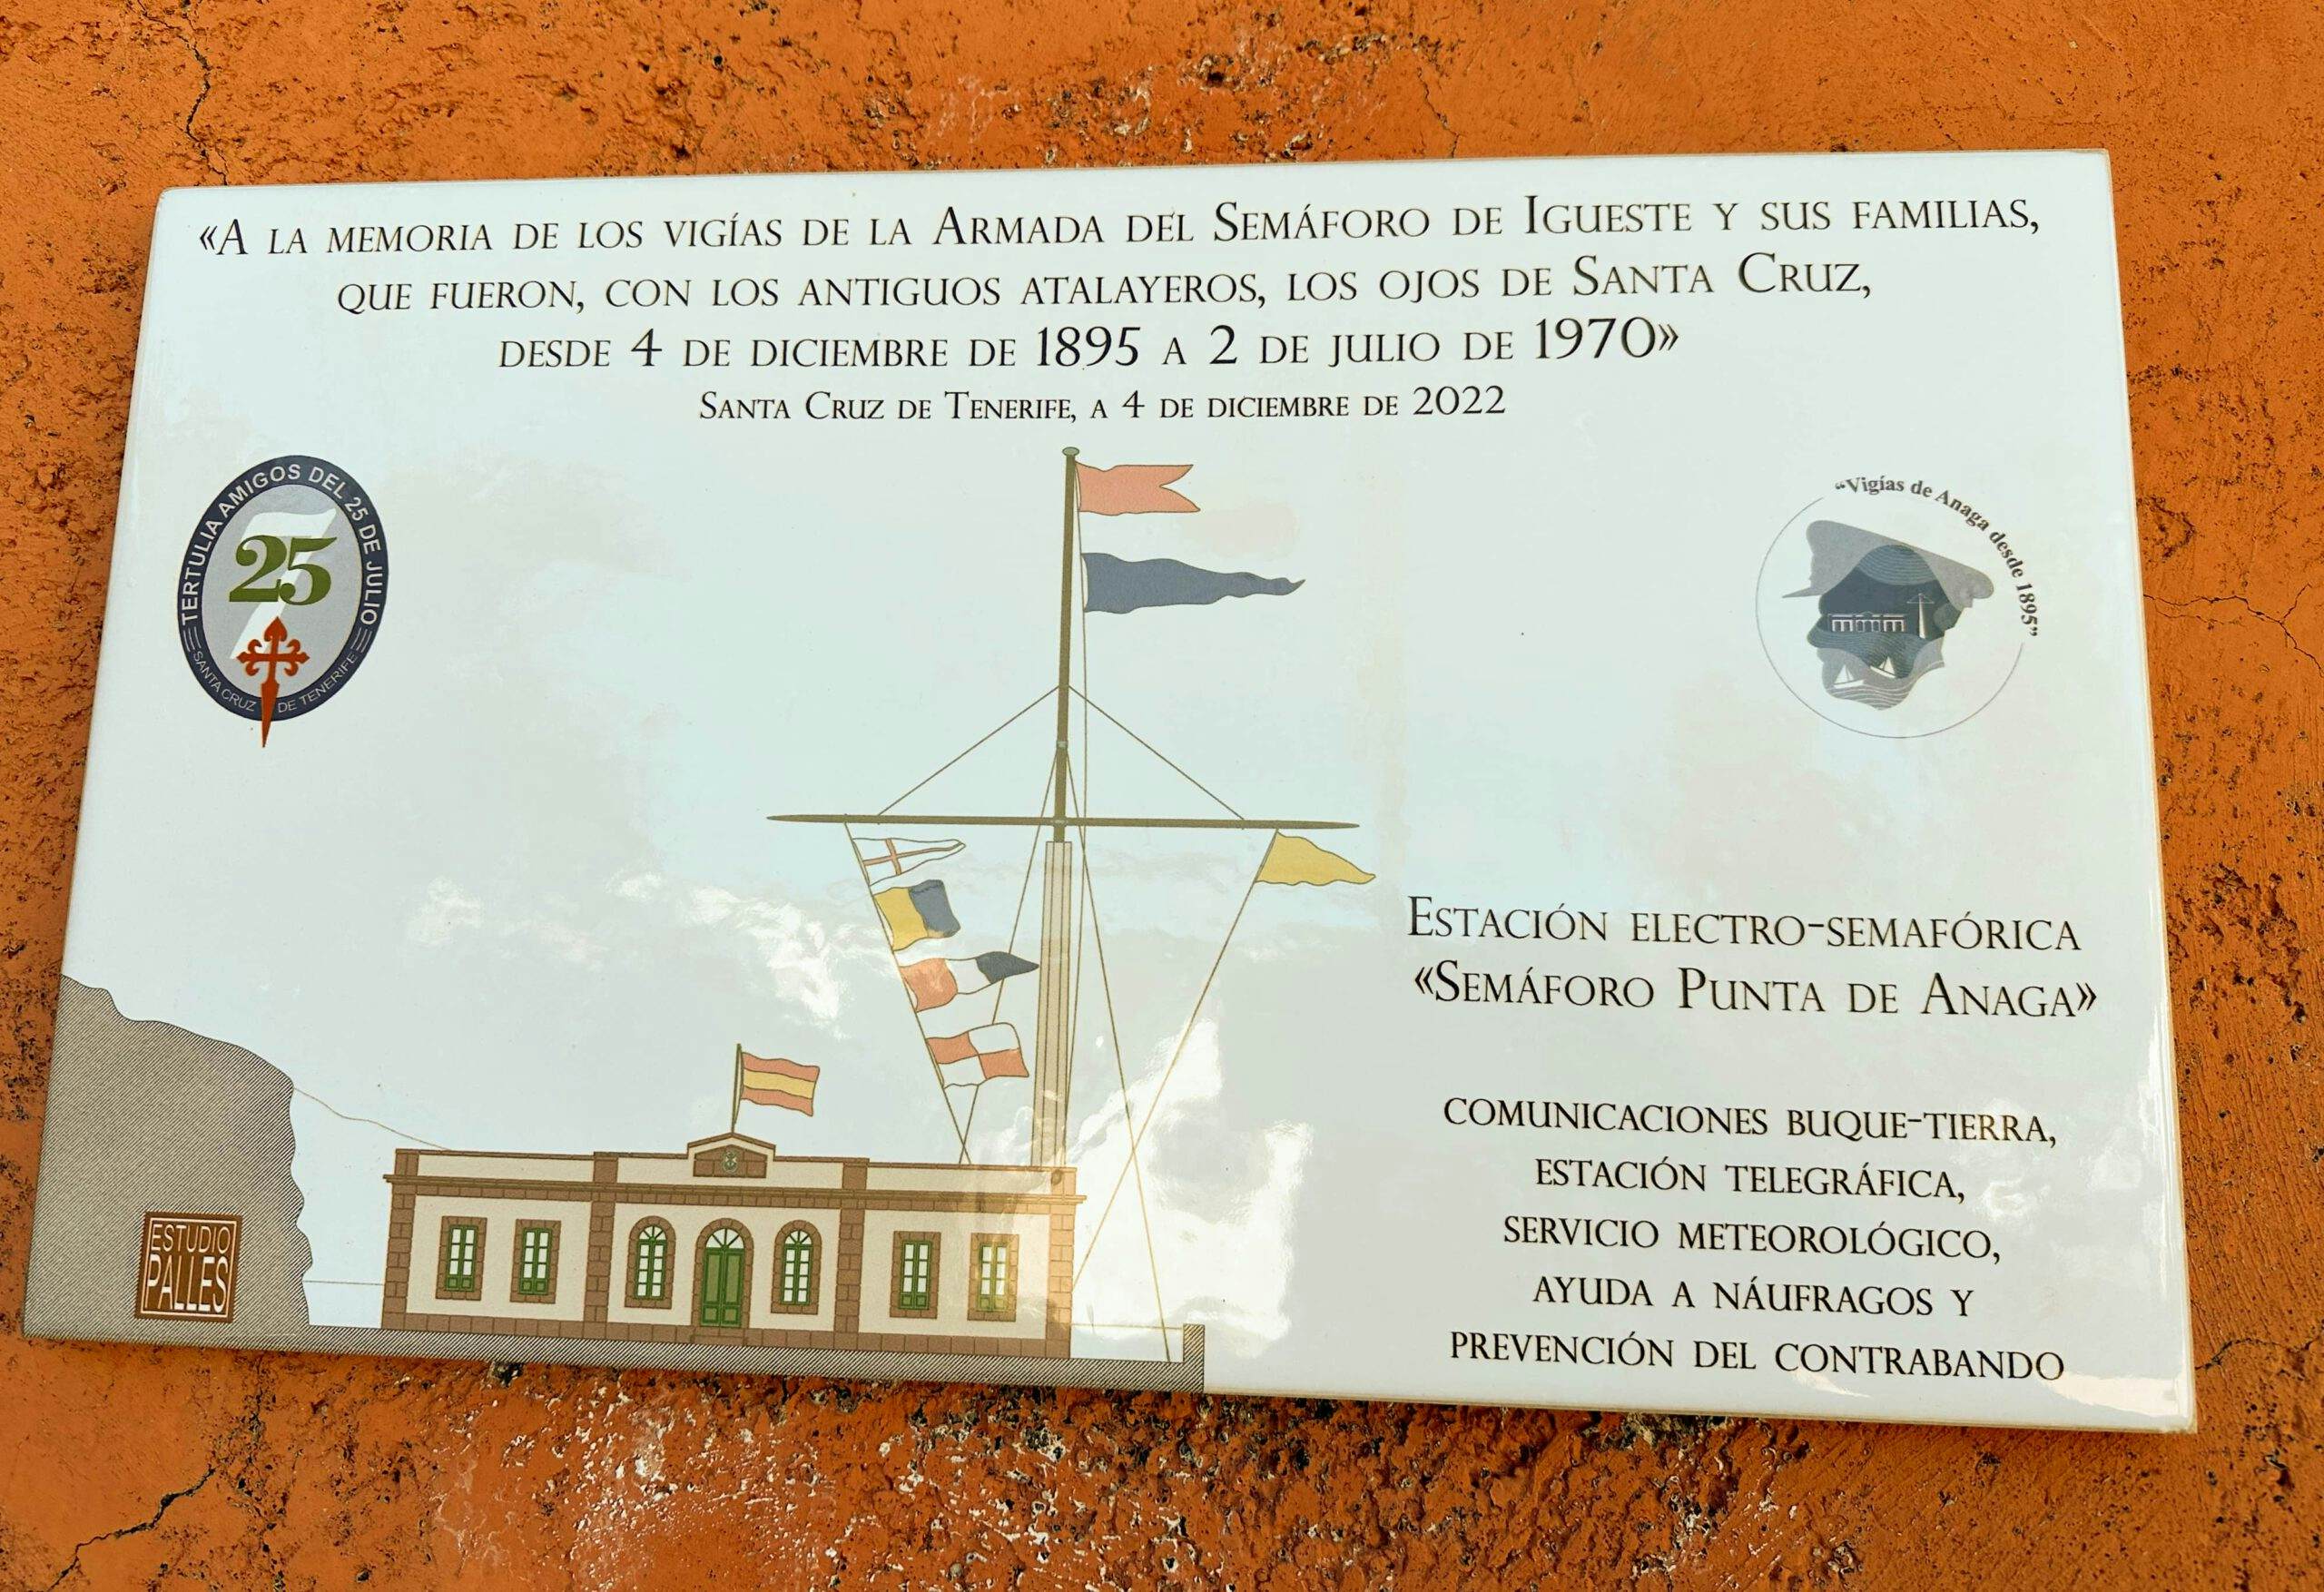 Reference to the Semáforo Punta de Anaga